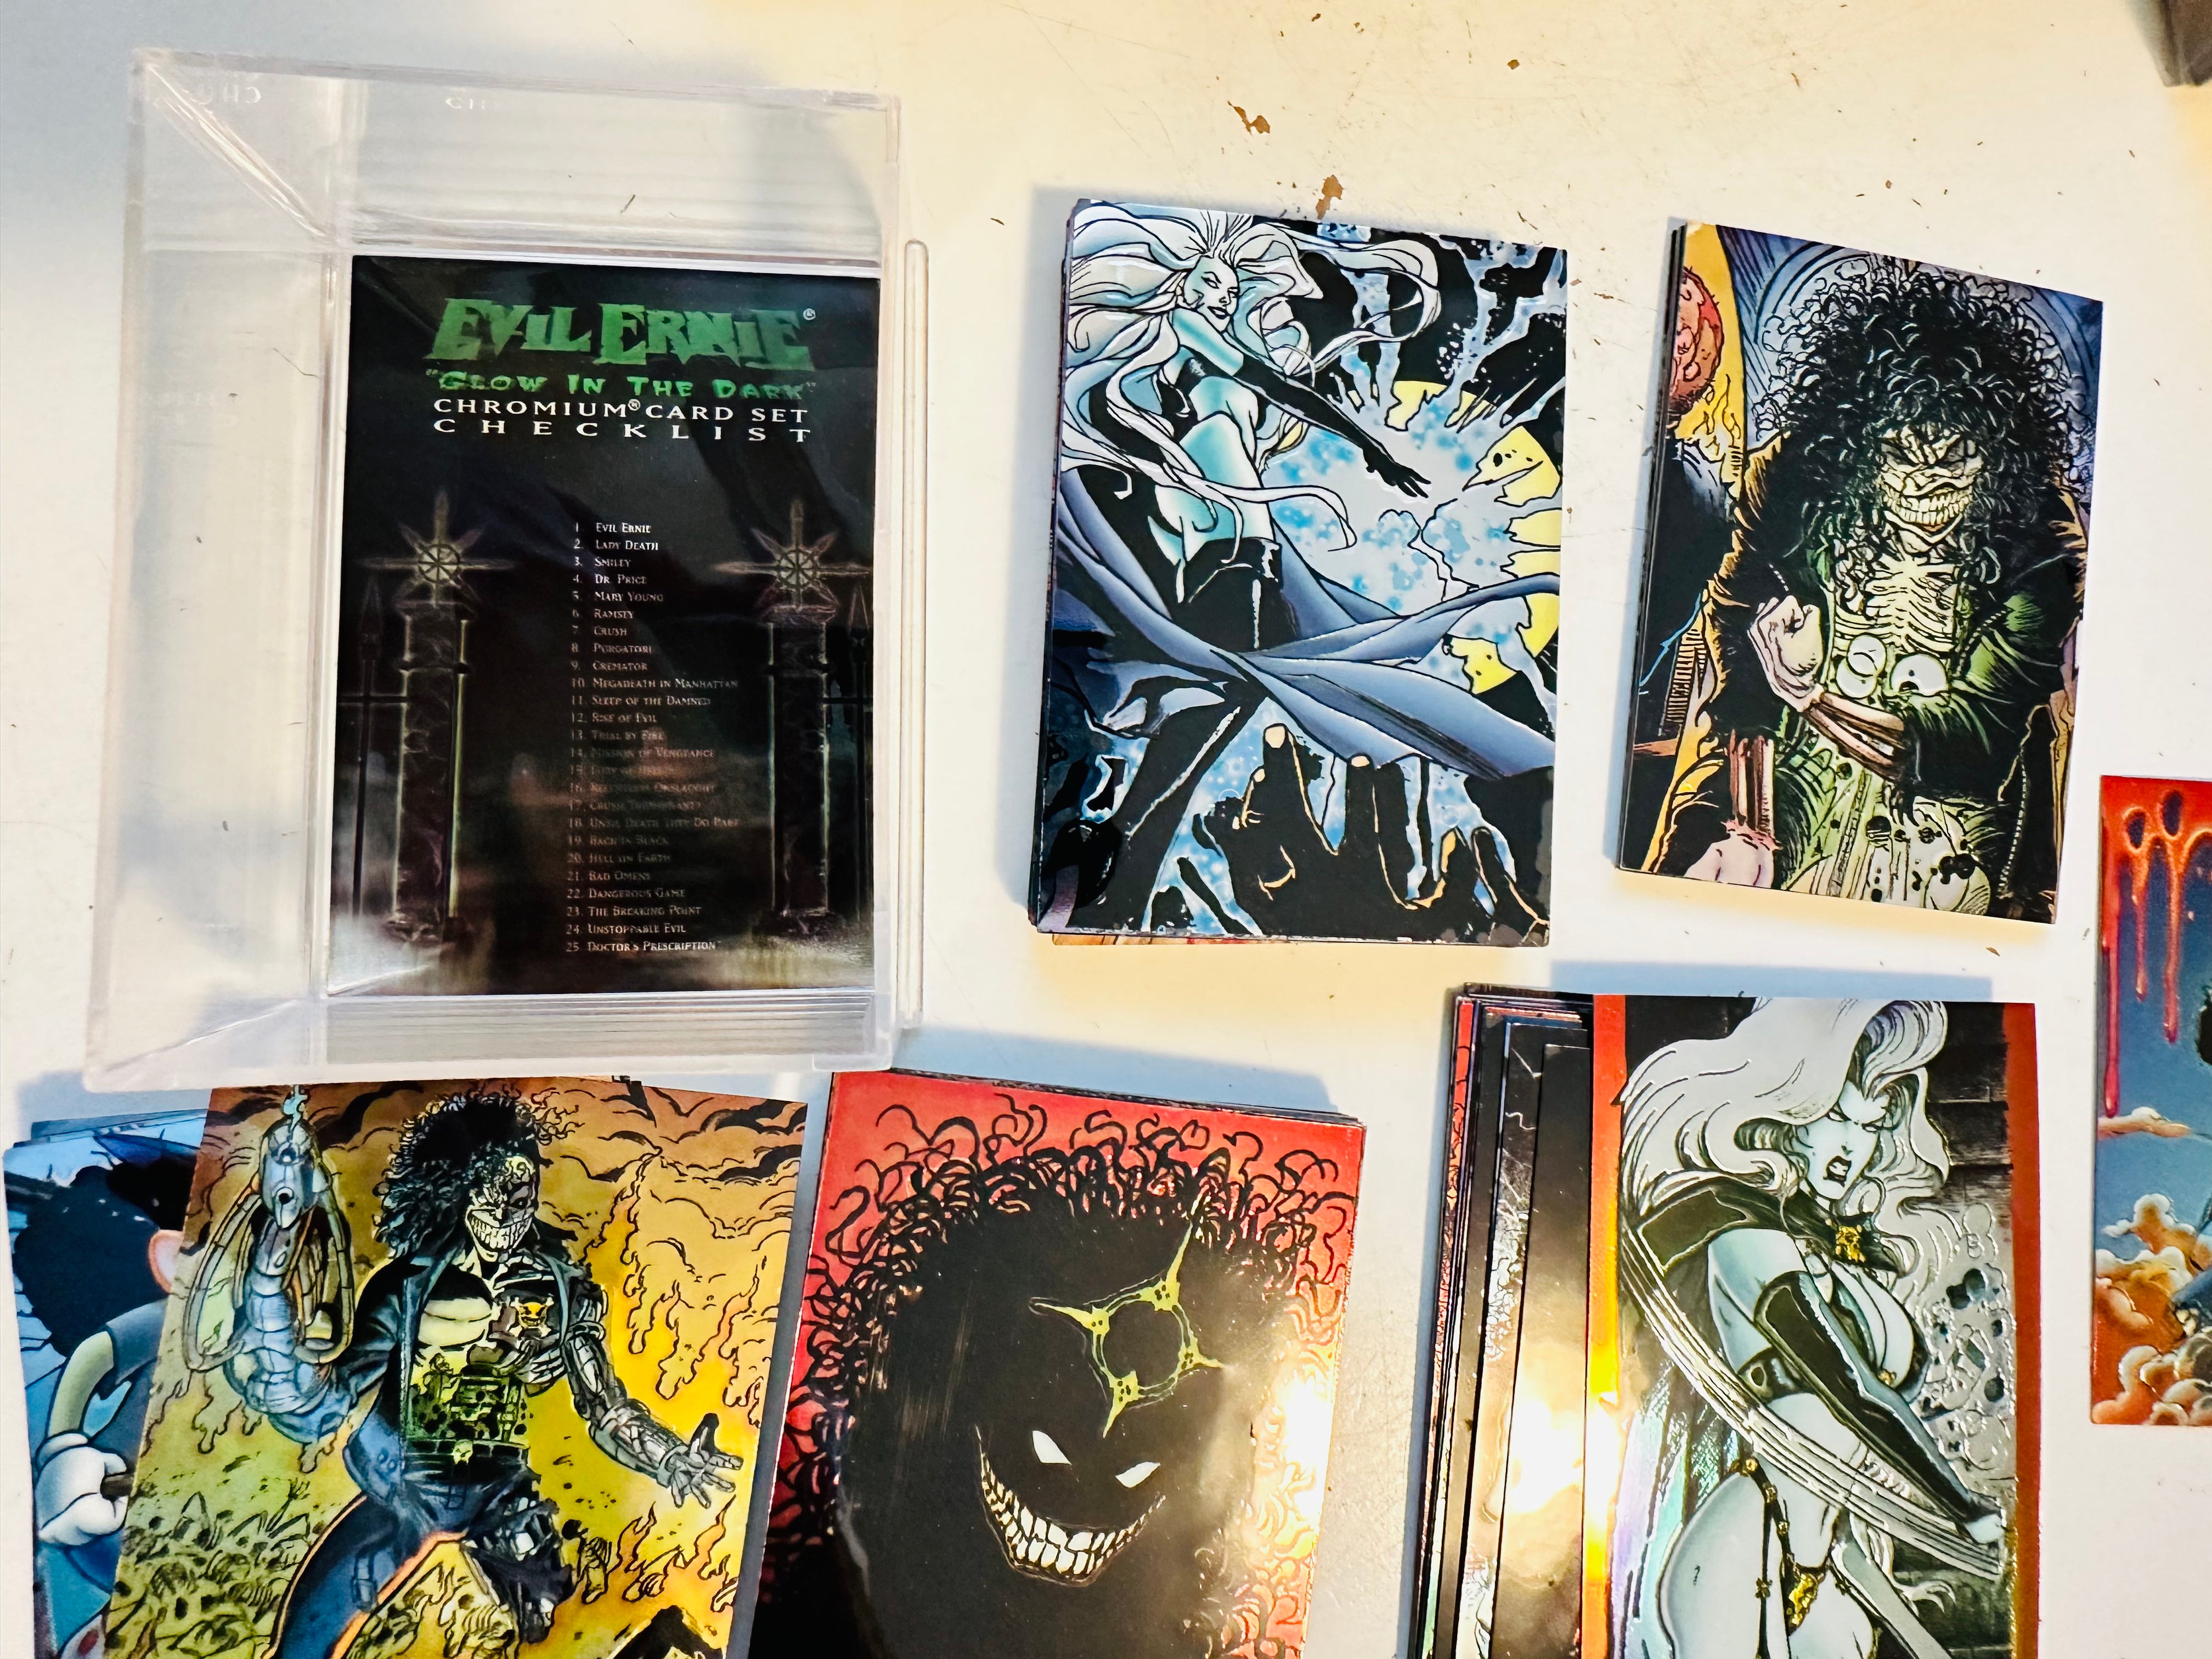 Evil Ernie Omni chrome glow the dark foil cards set 1992